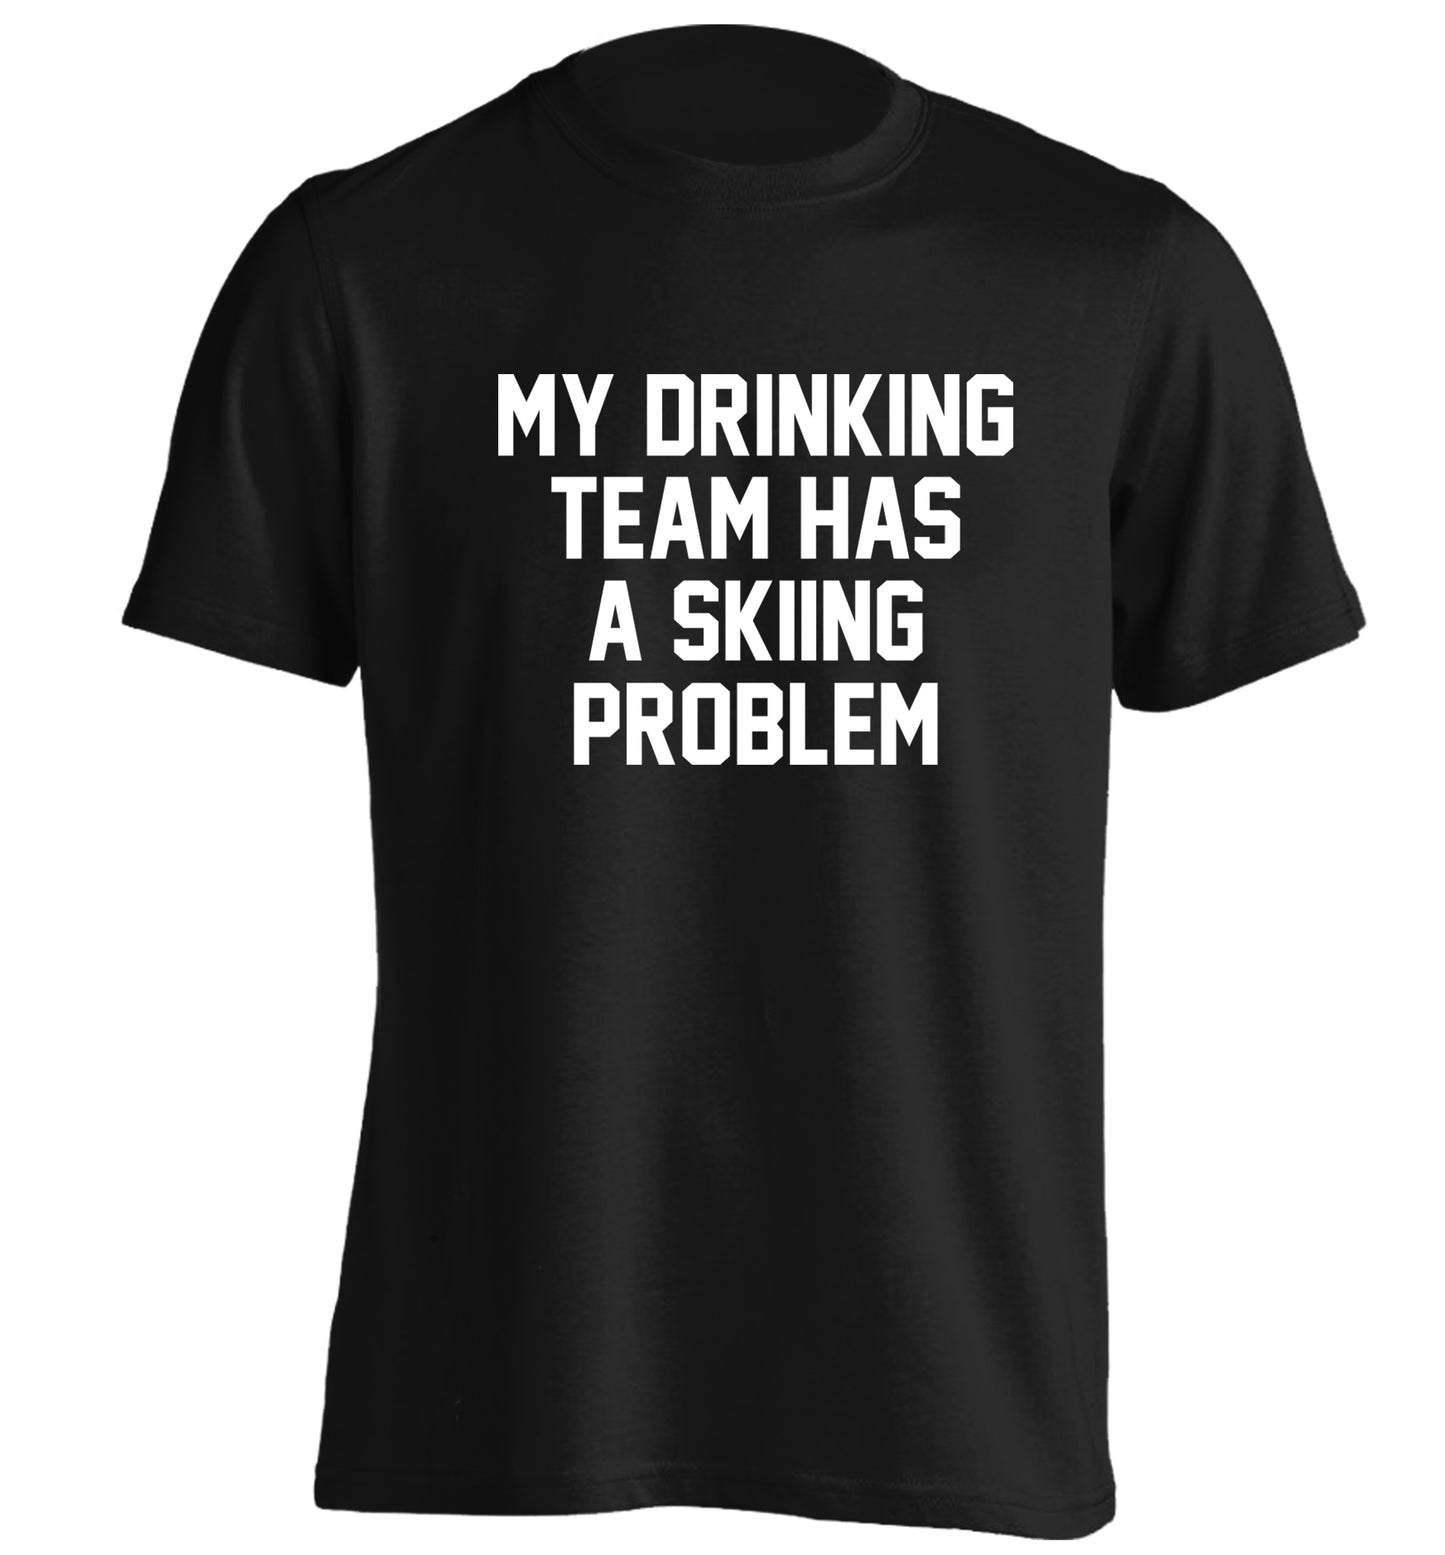 My drinking team has a skiing problem adults unisexblack Tshirt 2XL